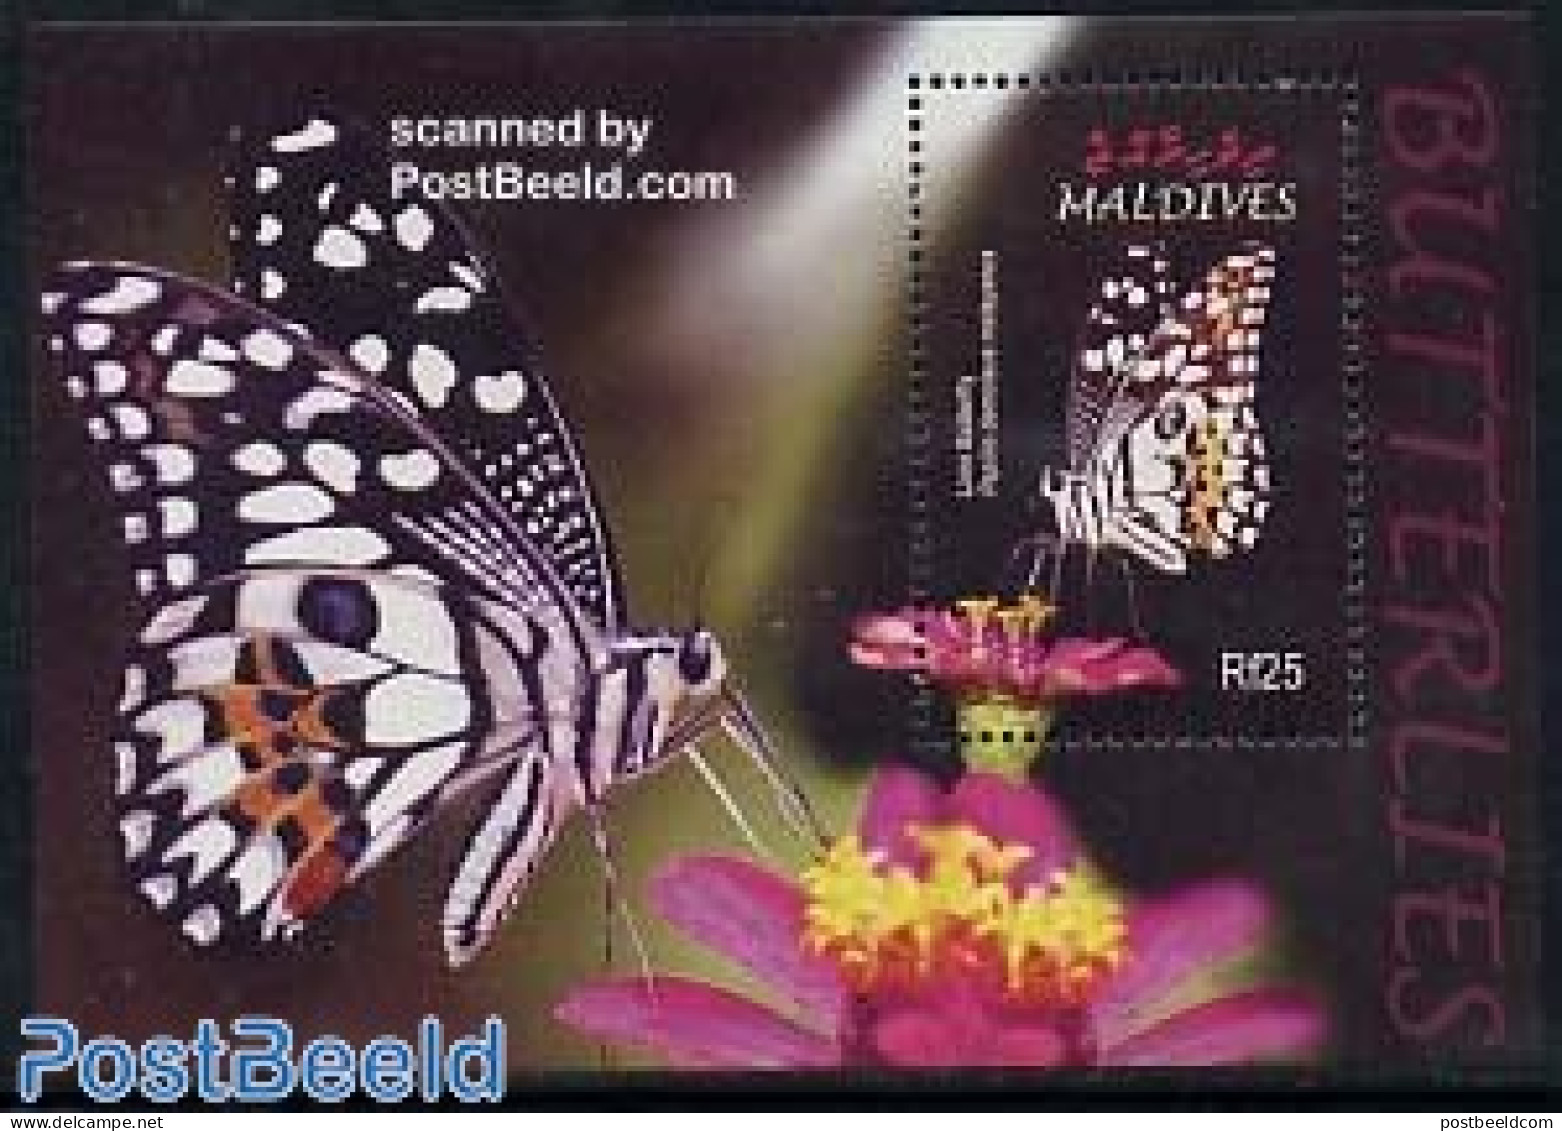 Maldives 2004 Butterflies S/s, Cethosia Cydippe, Mint NH, Nature - Butterflies - Flowers & Plants - Malediven (1965-...)